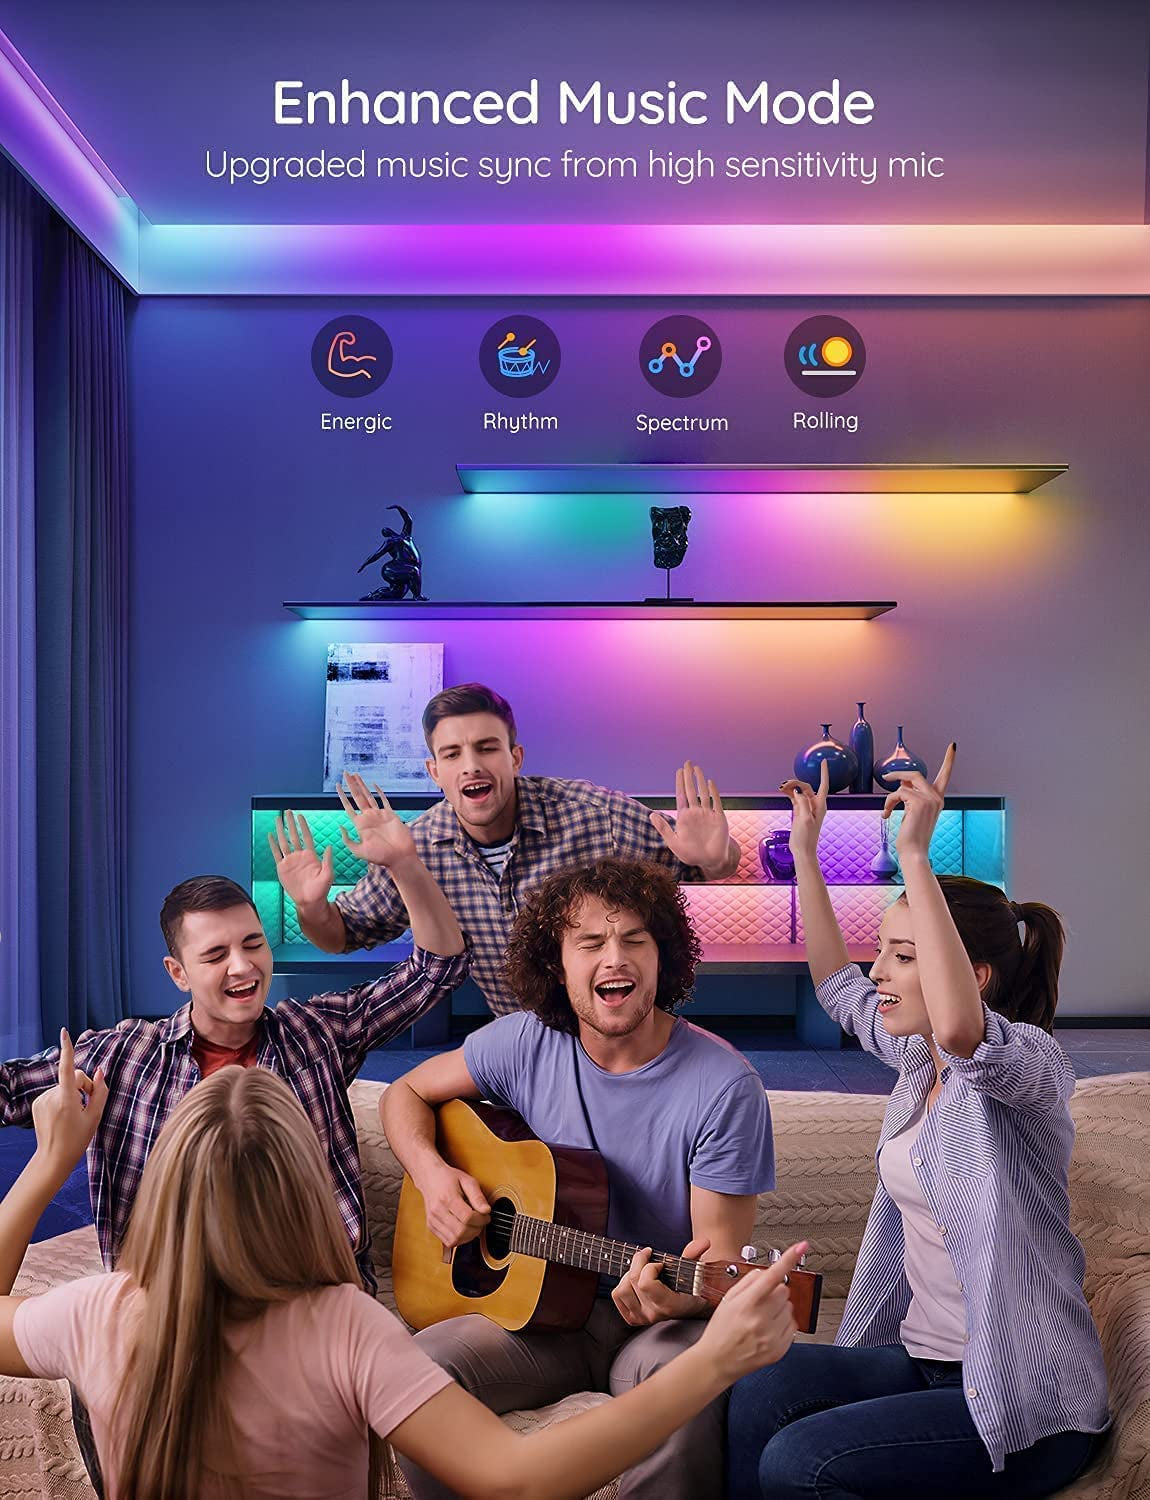 65.6Ft RGBIC LED Strip Lights for Bedroom, Smart LED Strip Lights Alexa Compatible, DIY Multiple Colors on One Line, Color Changing LED Lights Music Sync, Easter Decor, 2 Rolls of 32.8Ft